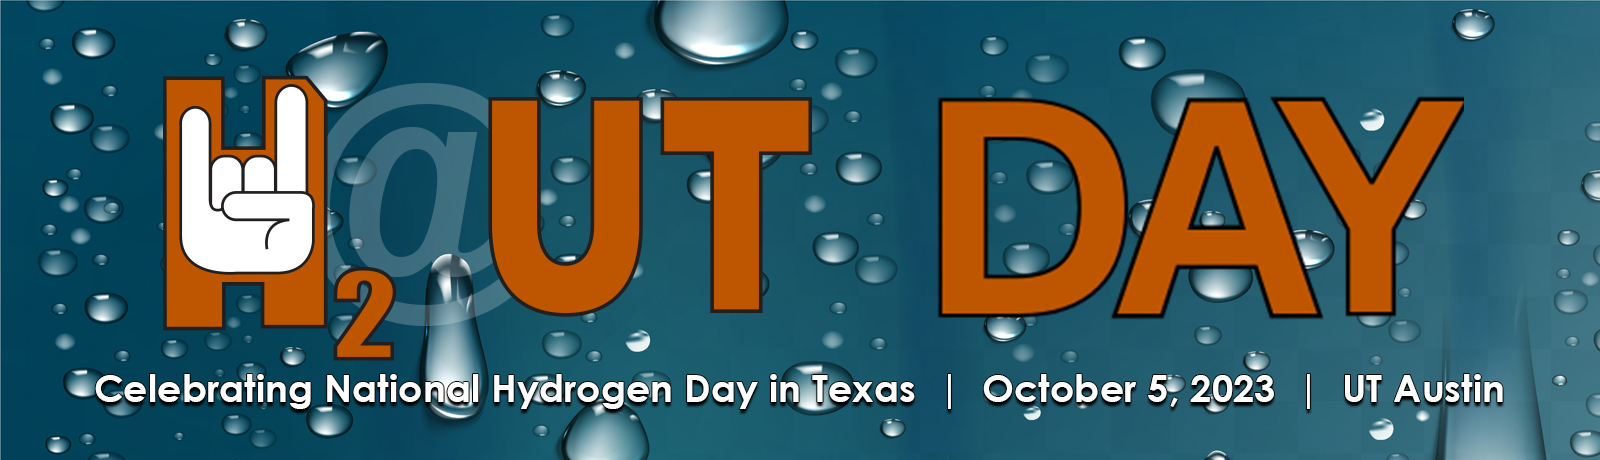 H2@UT Day - Celebrating National Hydrogen Day in Texas: Oct 5, 2023 | UT Austin